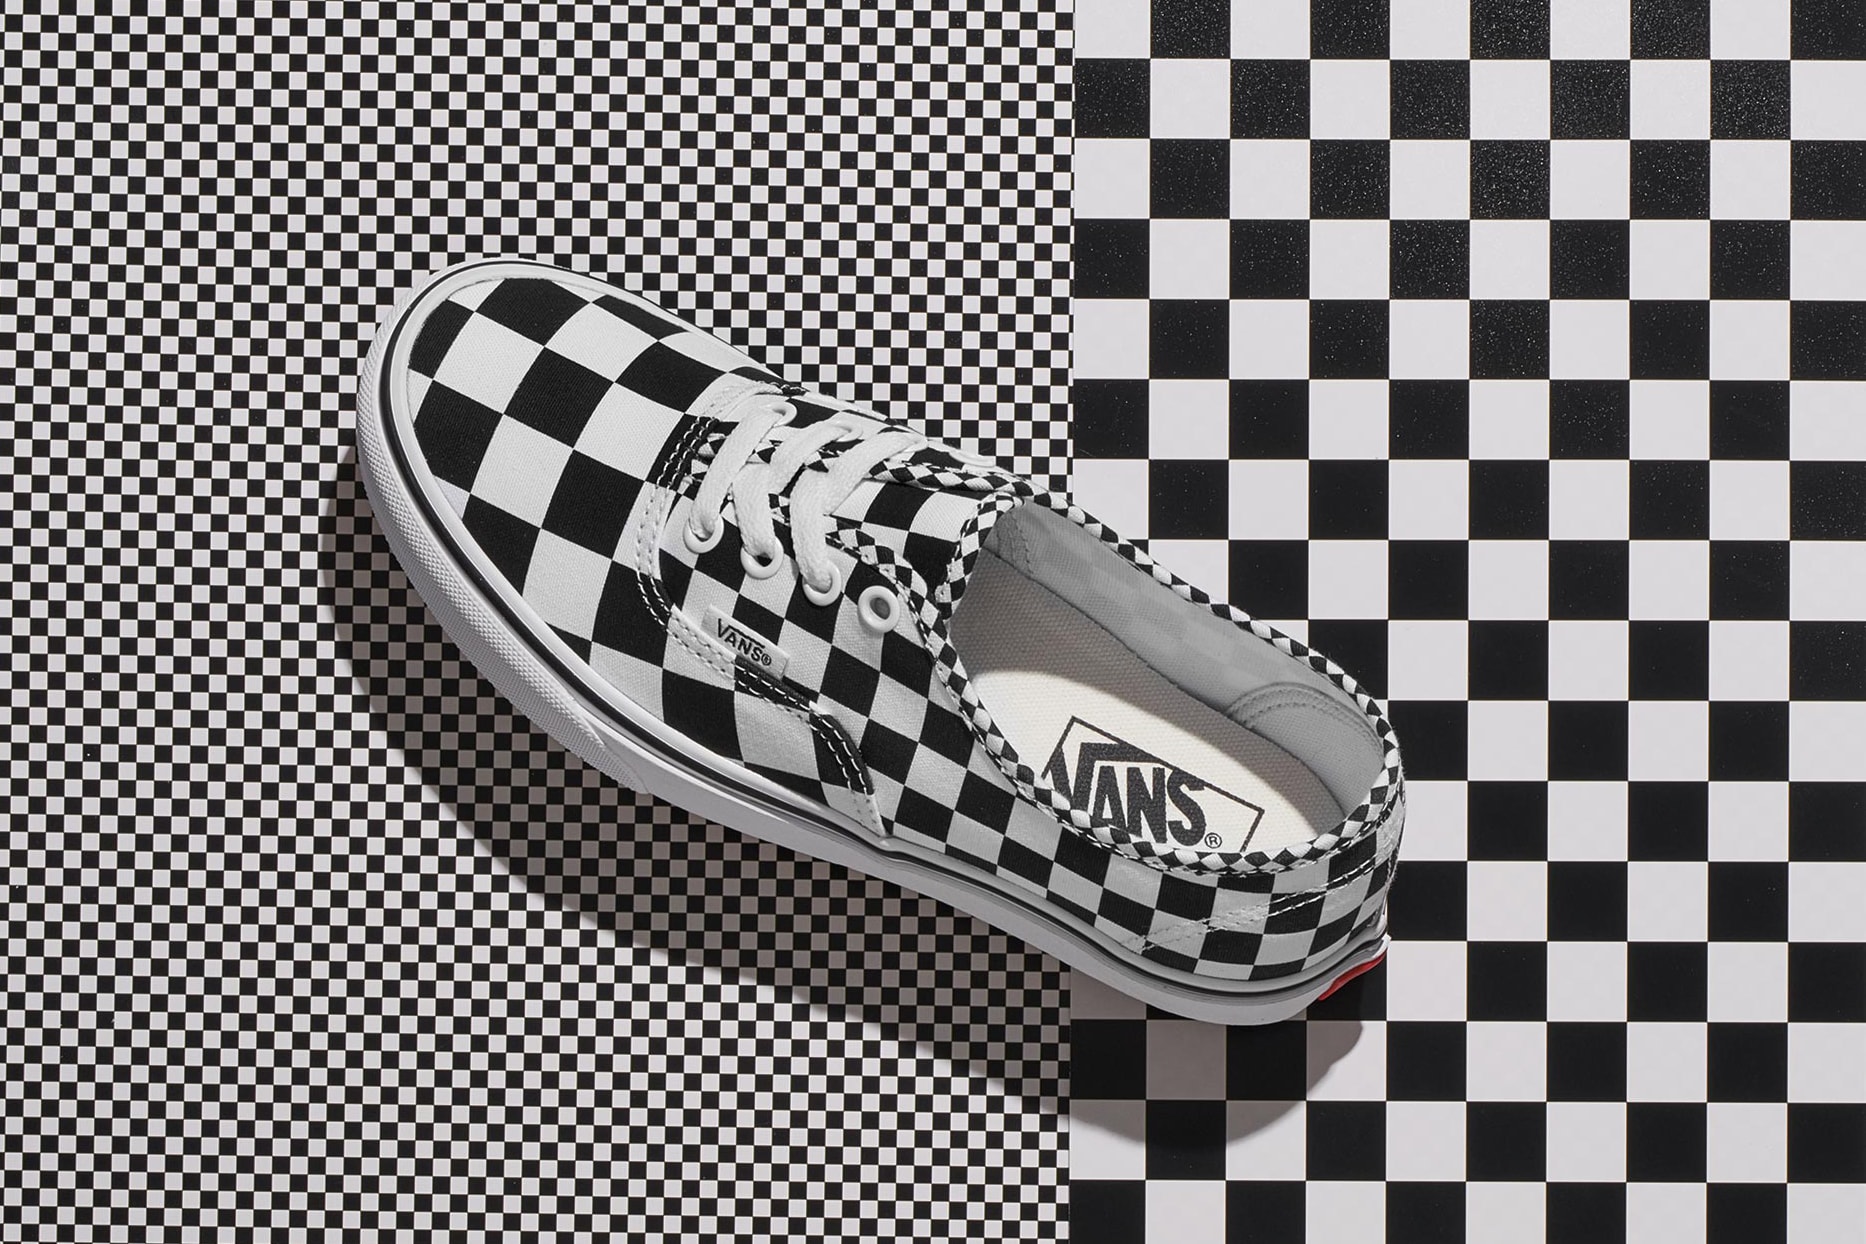 Vans Checkerboard Pattern Sk8-Hi Authentic Sneakers Black White Silhouette Skate Shoe